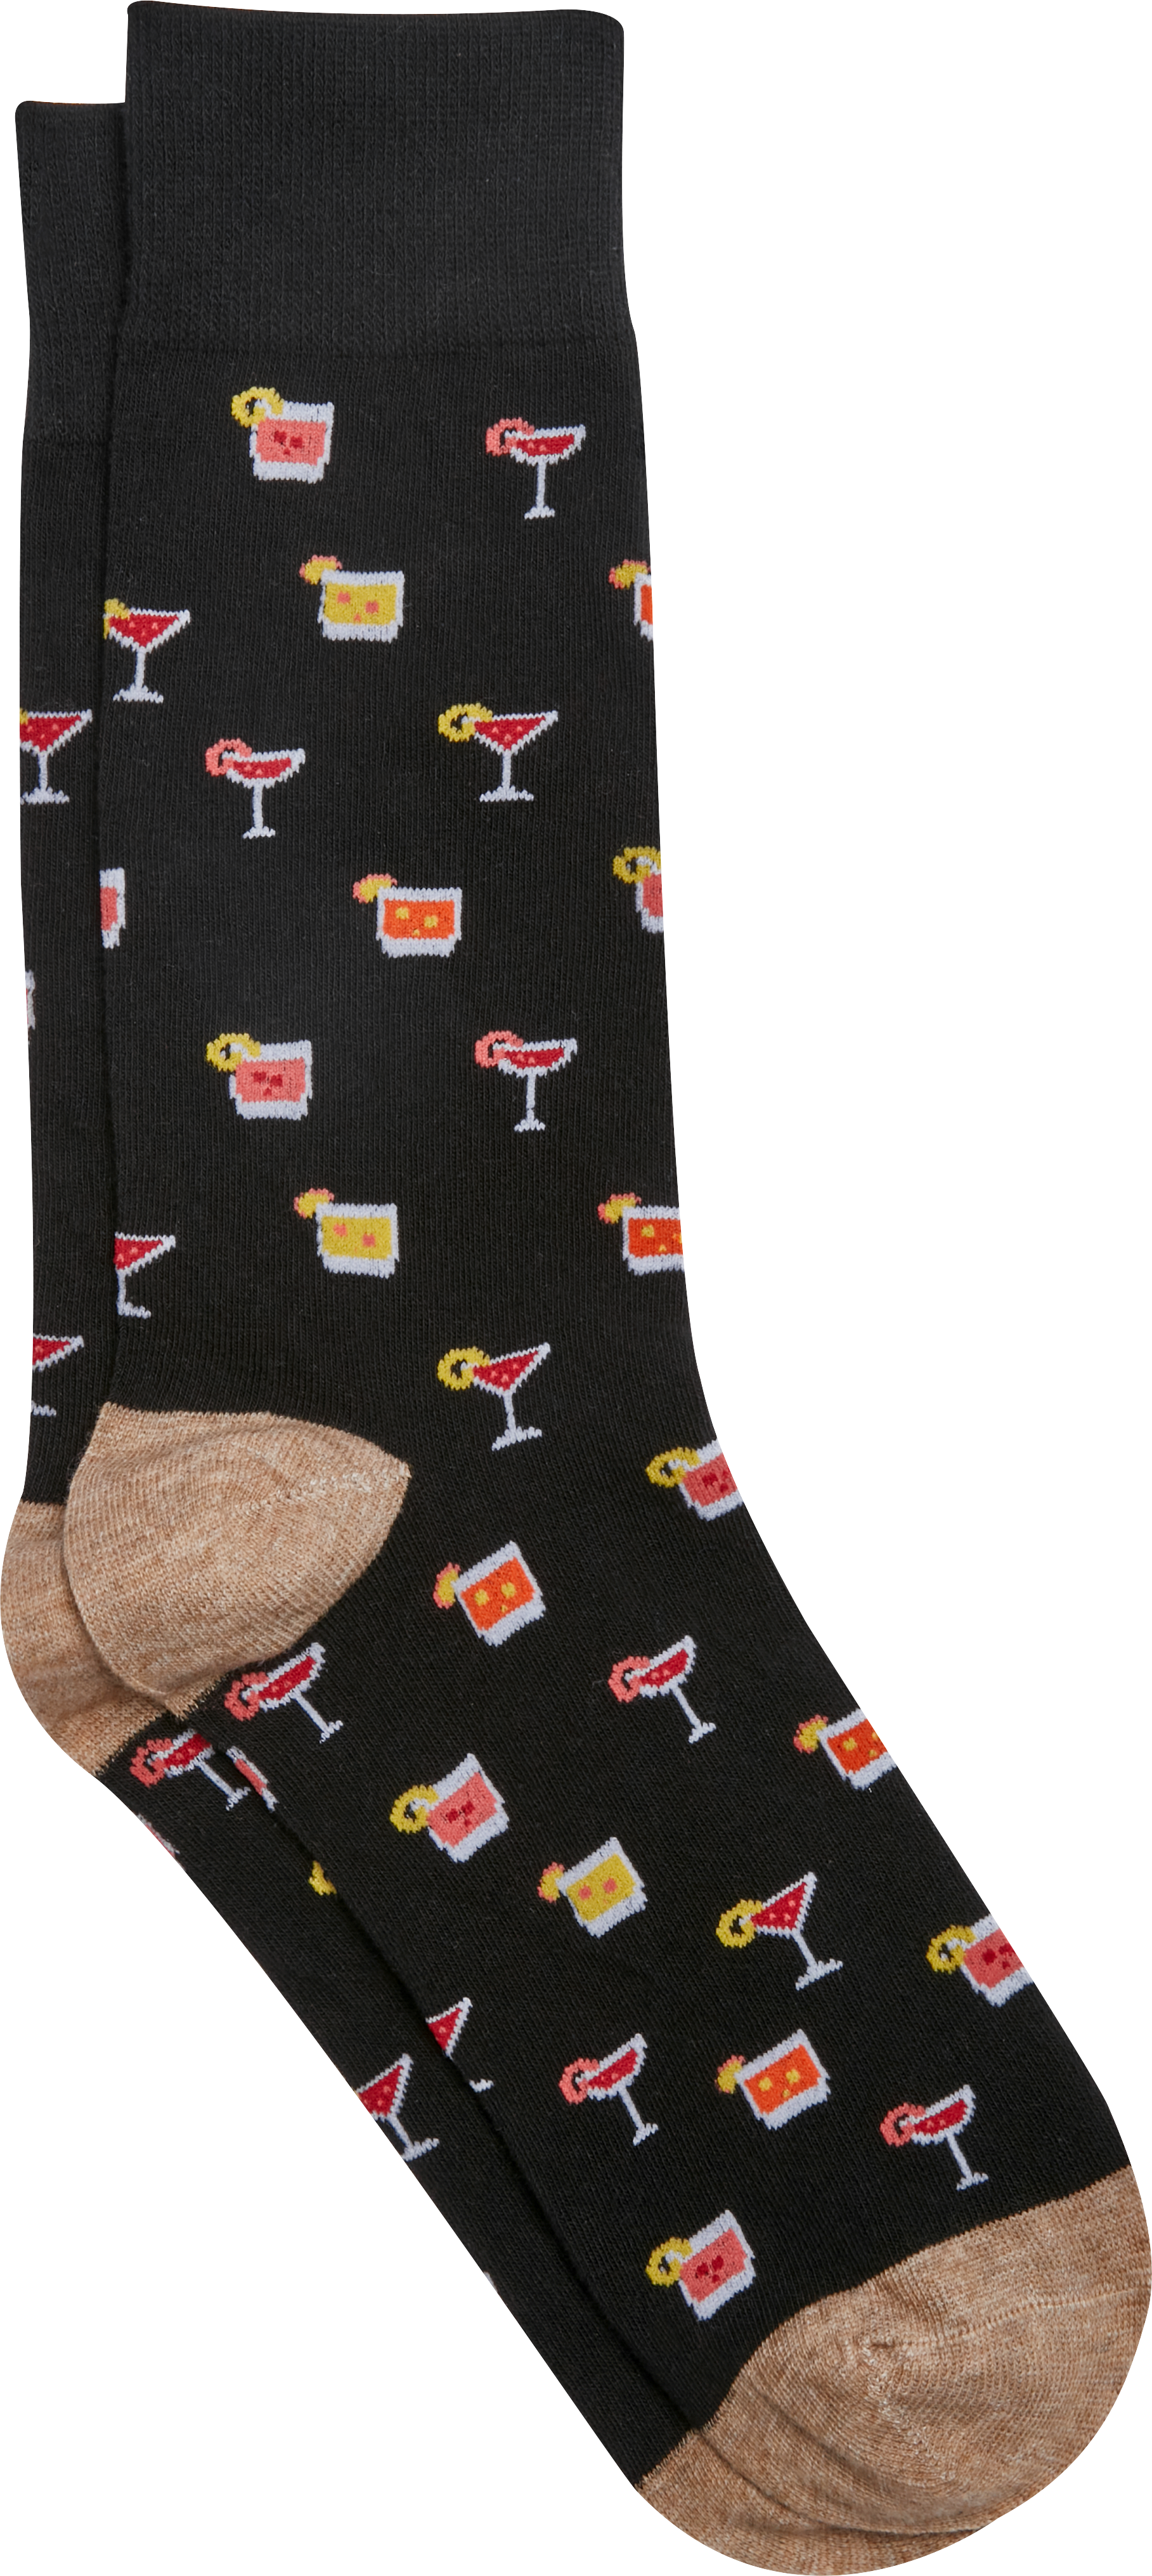 Cocktail Socks